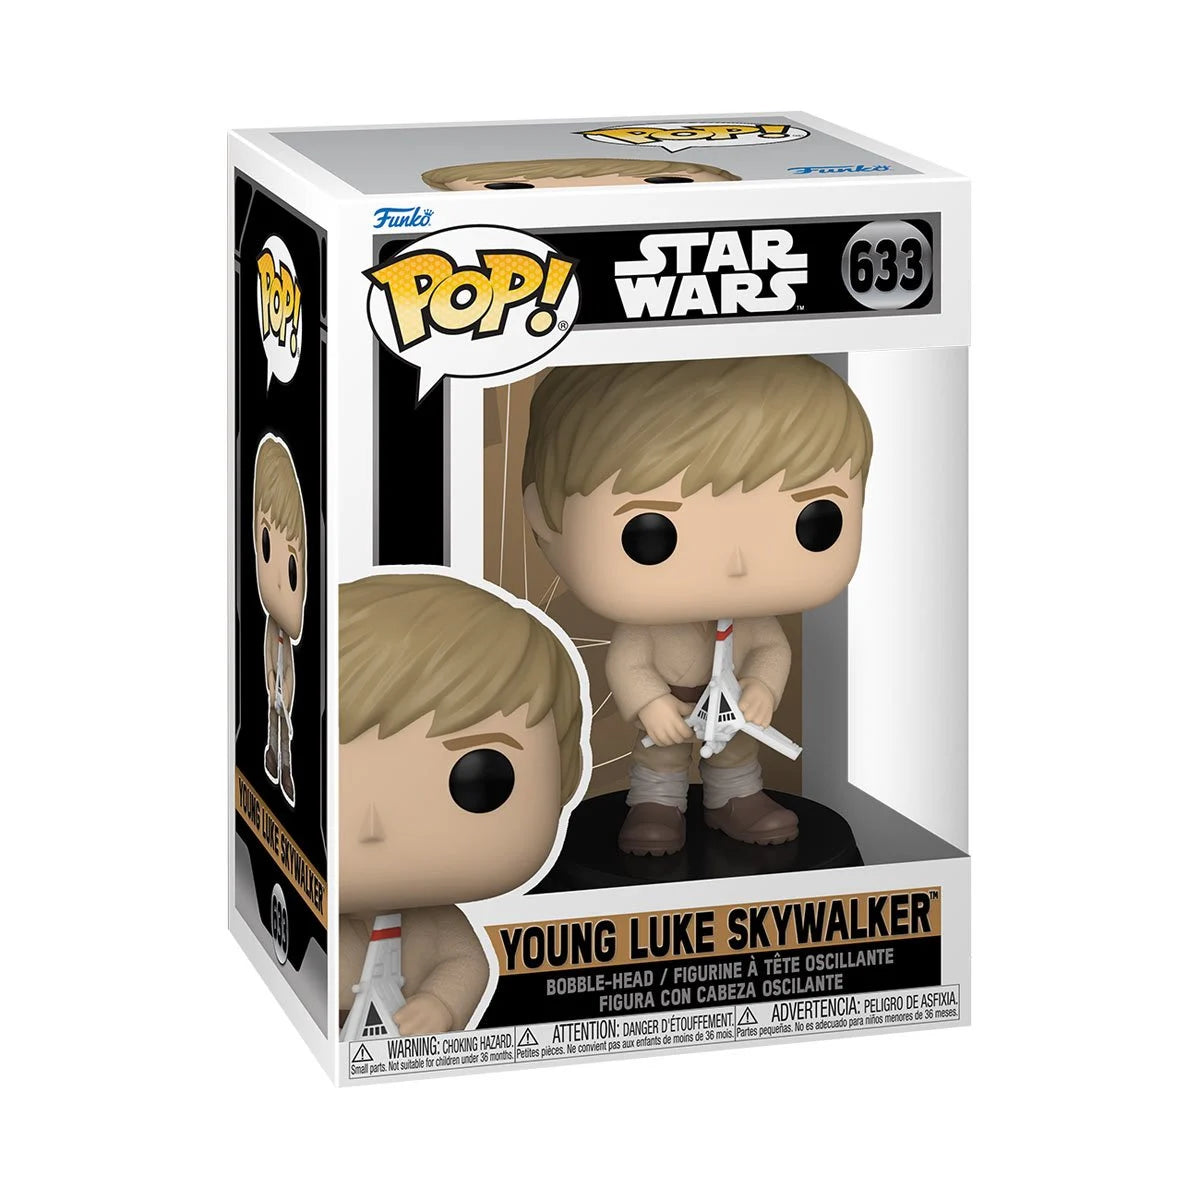 Star Wars: Obi-Wan Kenobi Young Luke Skywalker Funko Pop! Vinyl Figure #633 - Heretoserveyou